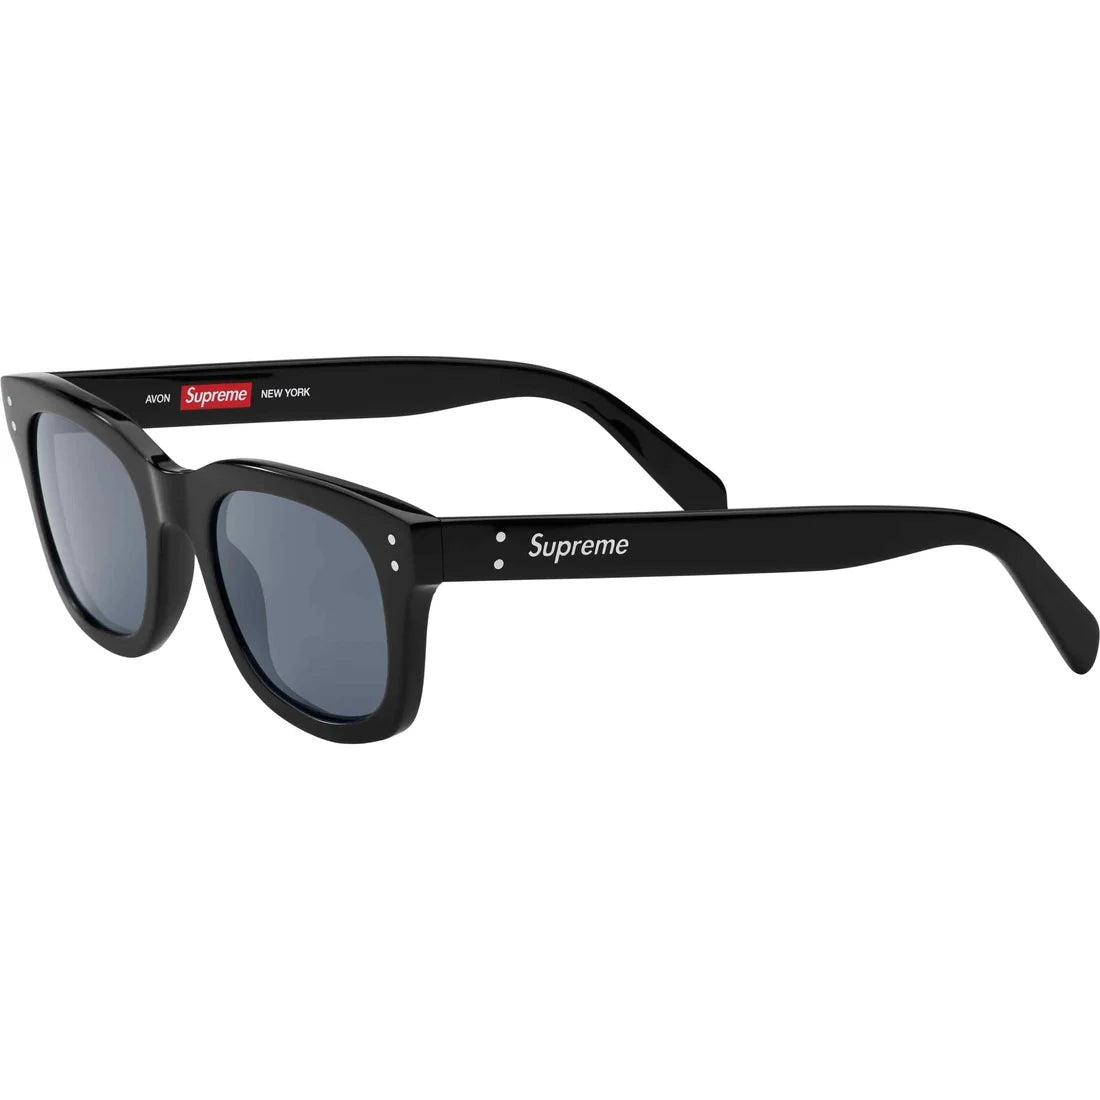 Supreme Avon Sunglasses Black